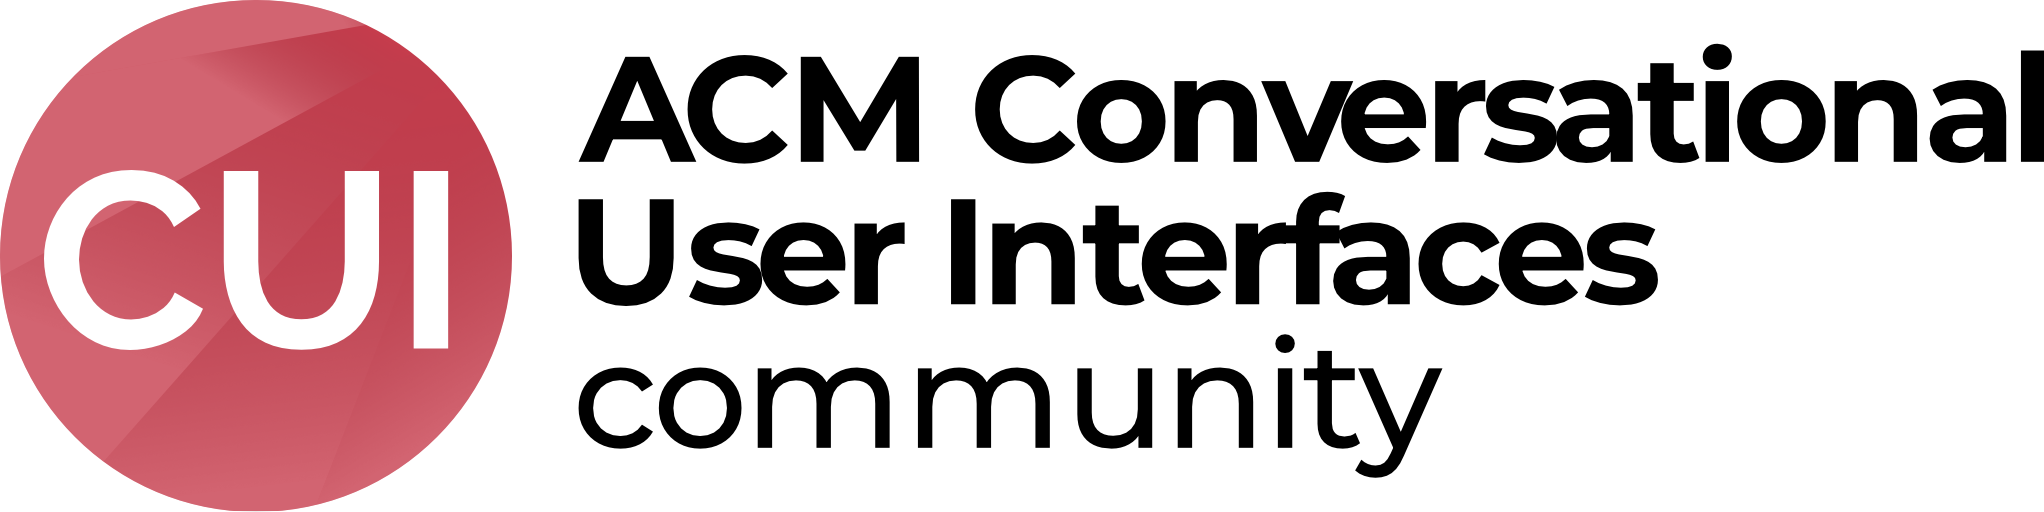 ACM CUI logo